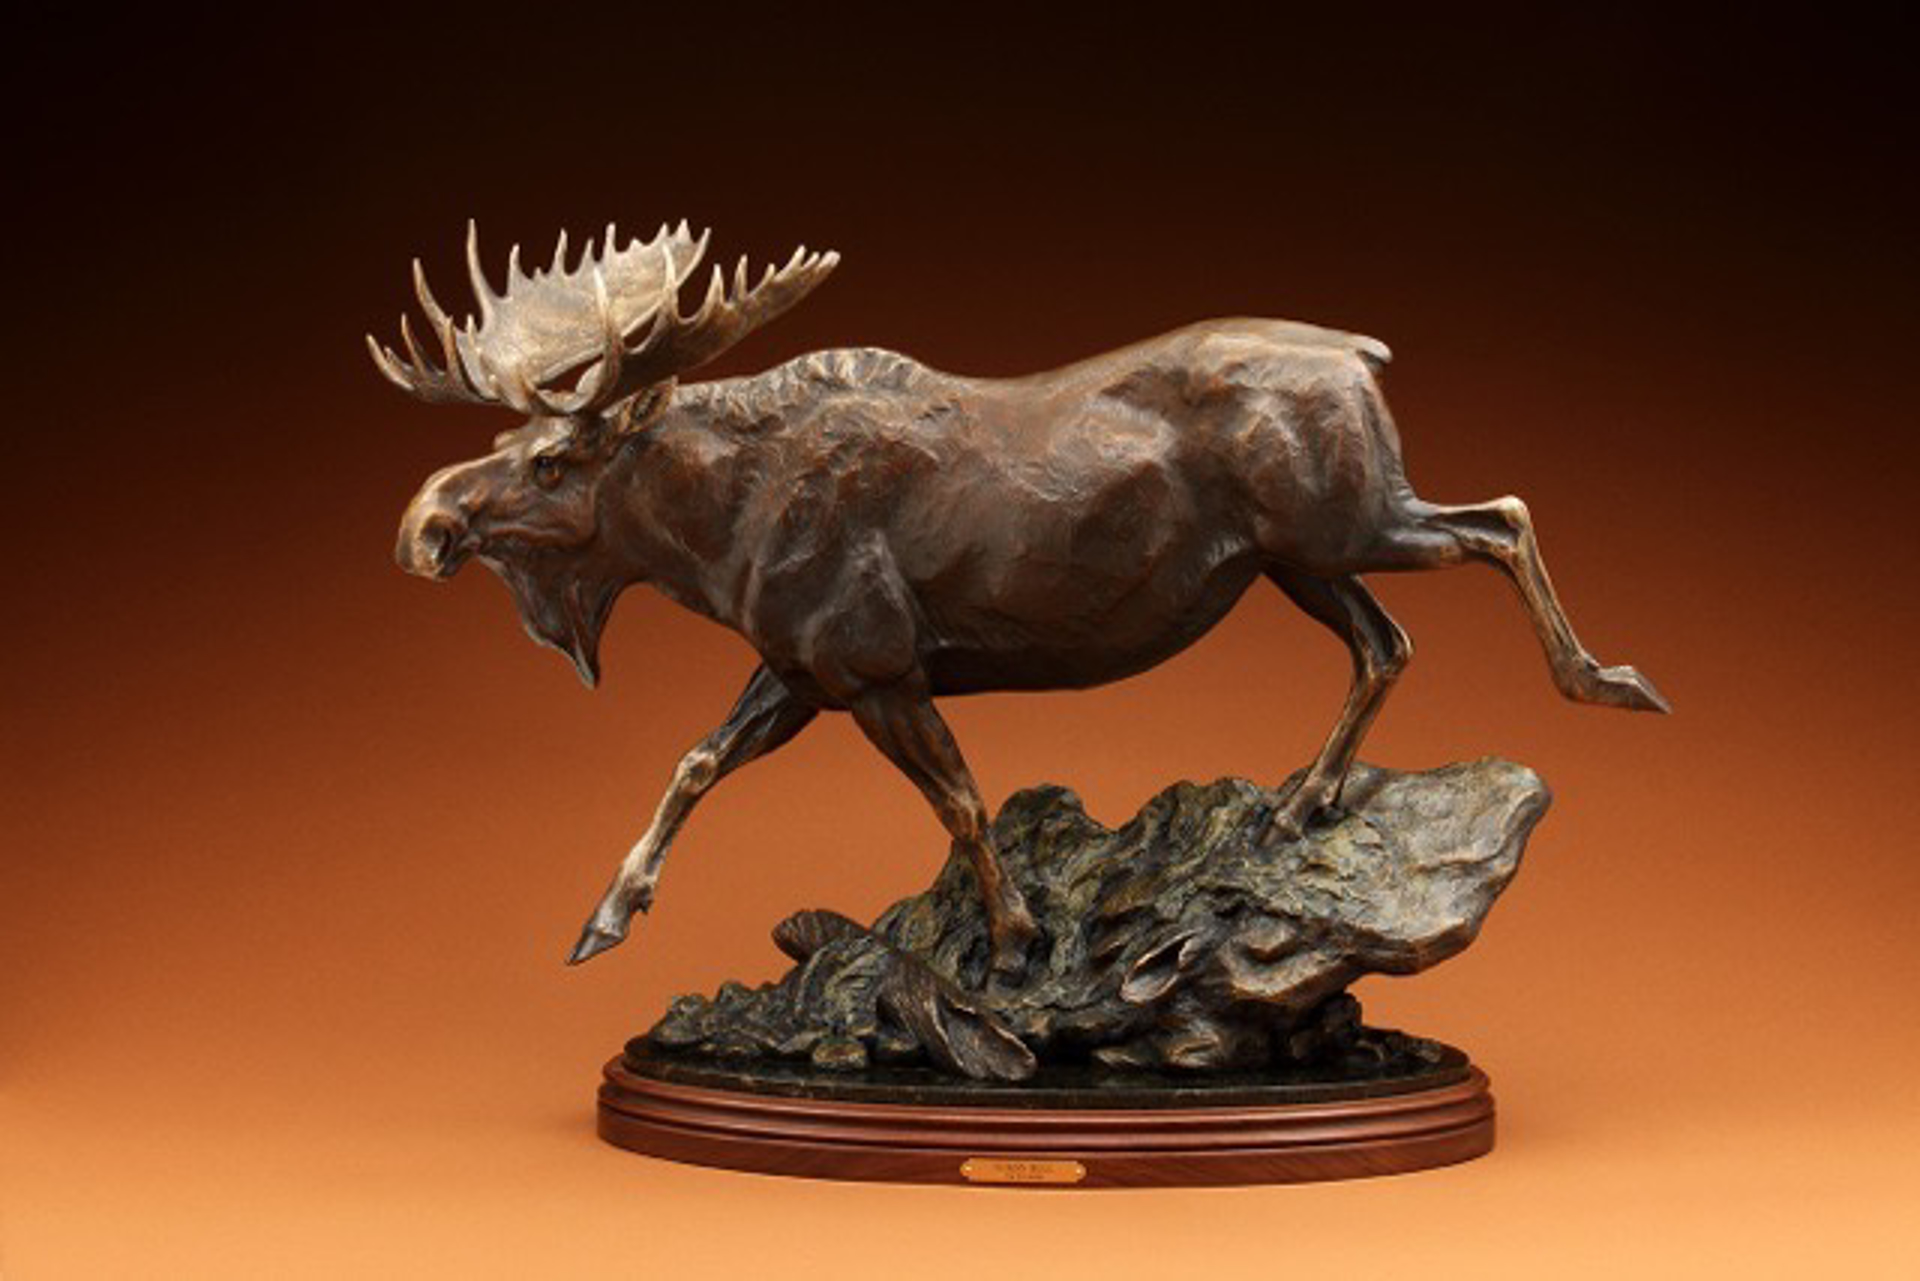 Yukon Bull by Jim Gilmore